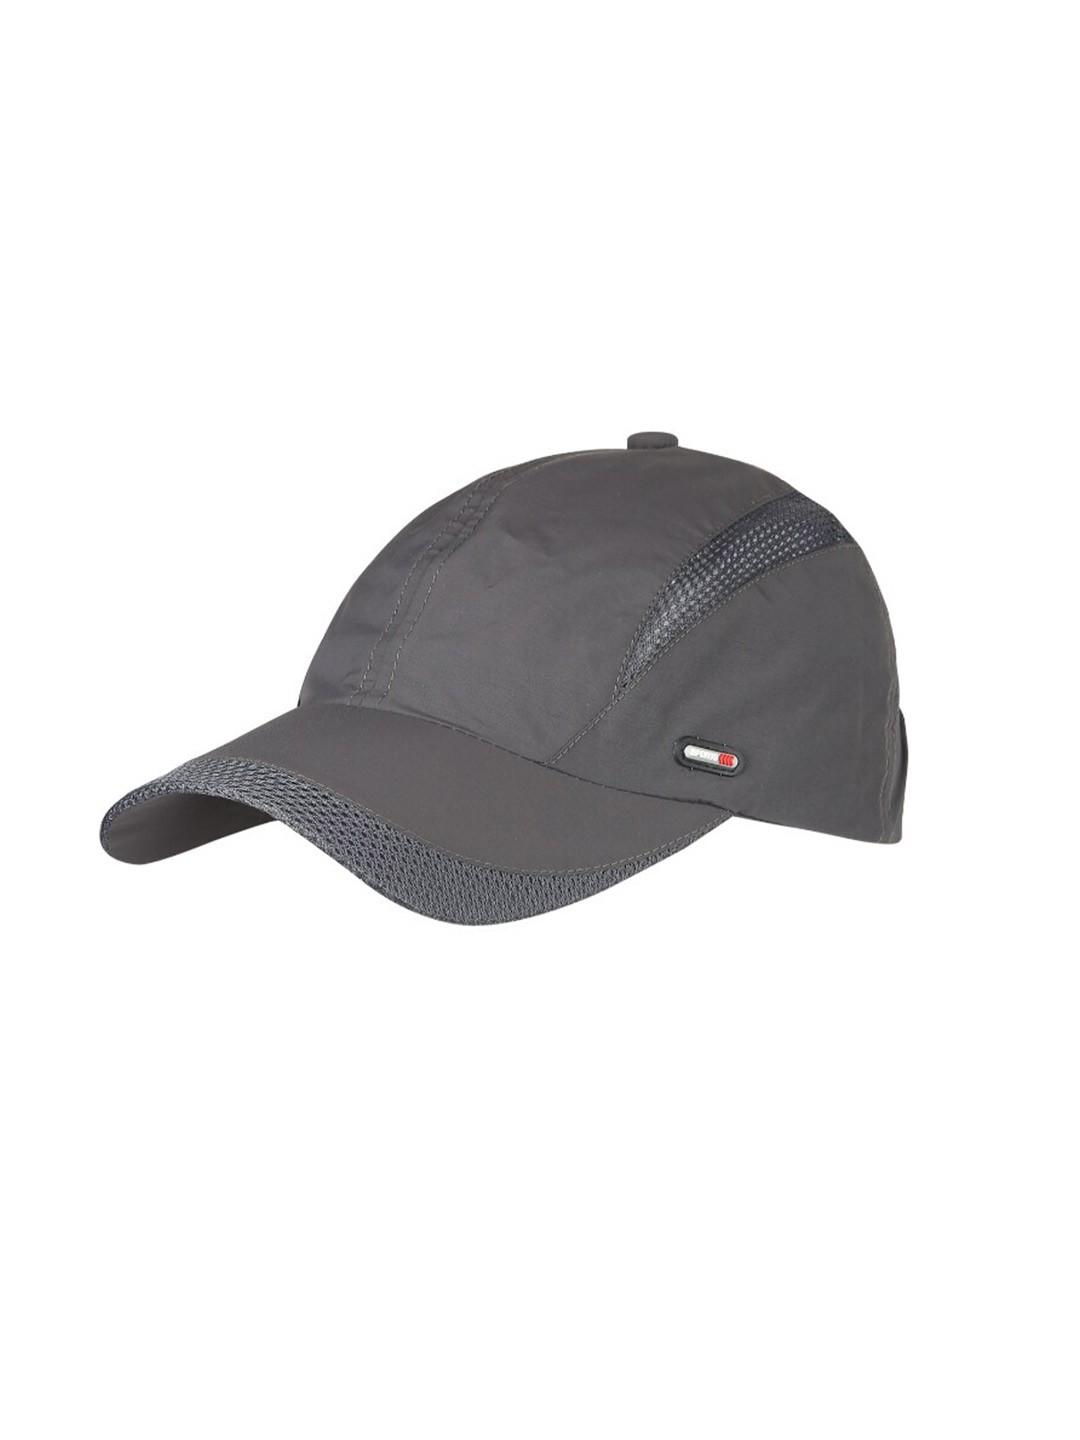 Accessories Caps | iSWEVEN Grey Snapback Cap - JF53744